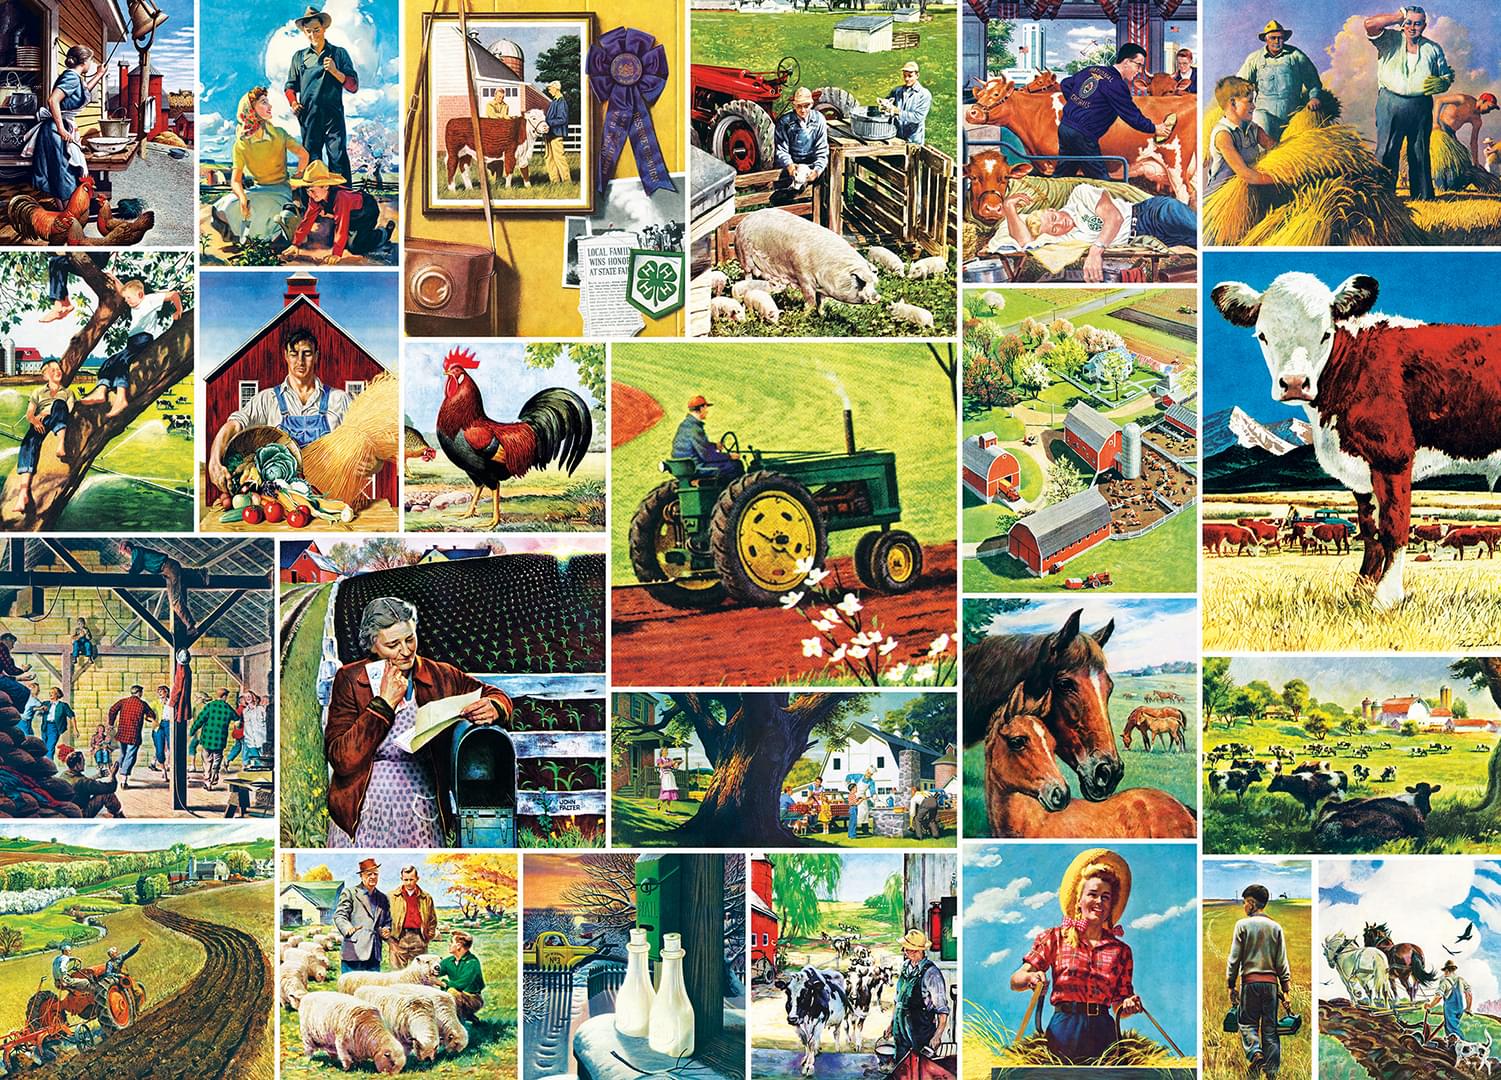 Saturday Evening Post Farmland Collage 1000 Piece Jigsaw Puzzle